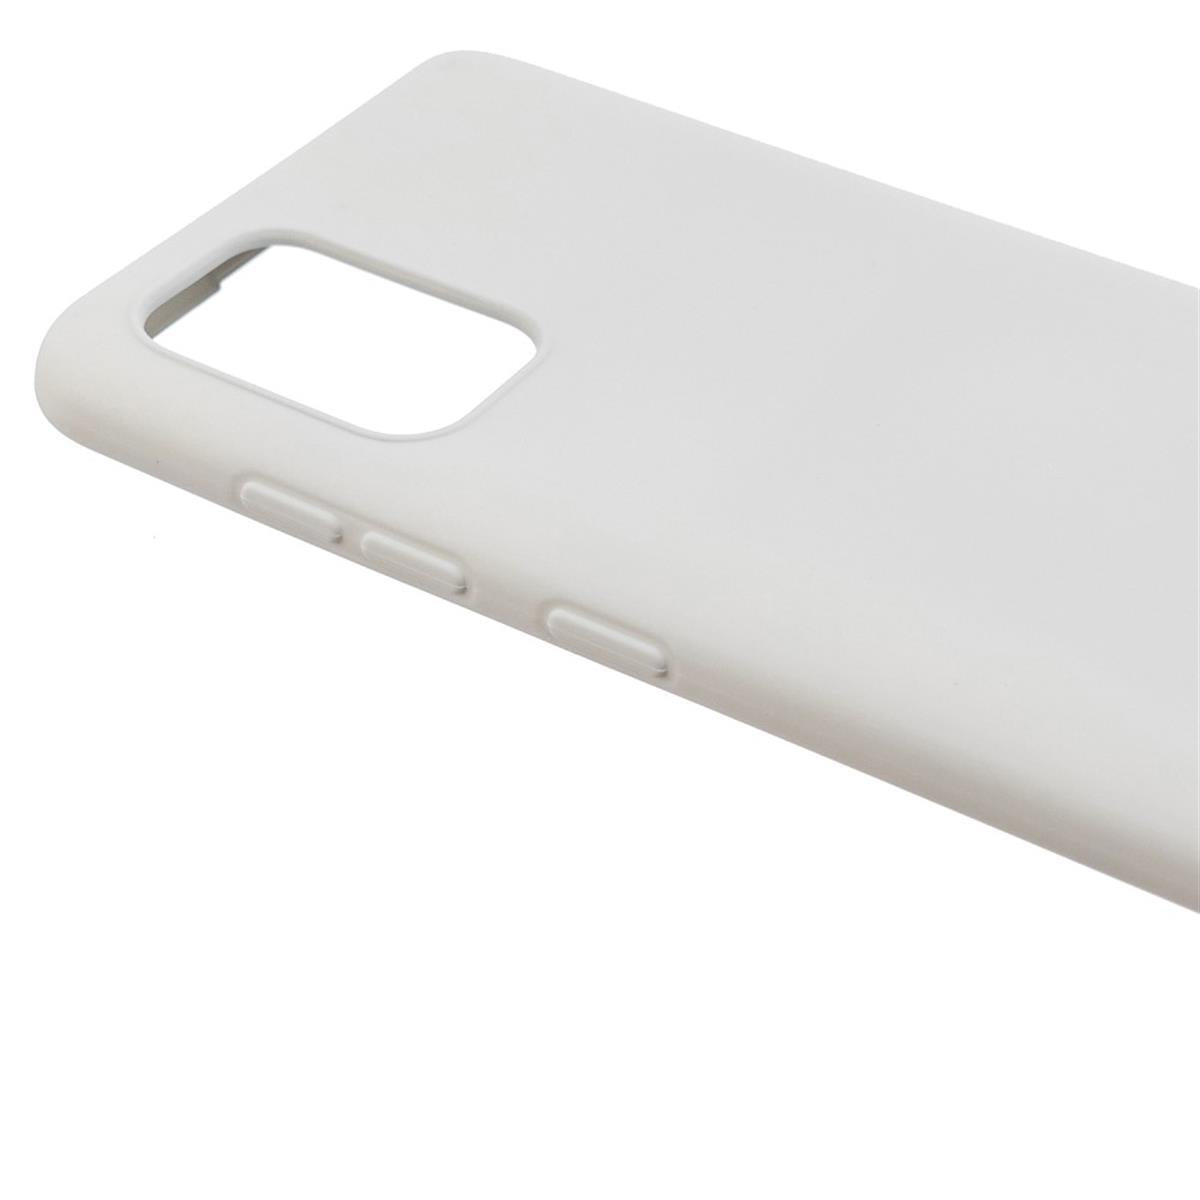 Hülle für Samsung Galaxy A72 5G Handyhülle Silikon Case Cover Bumper Matt Weiß